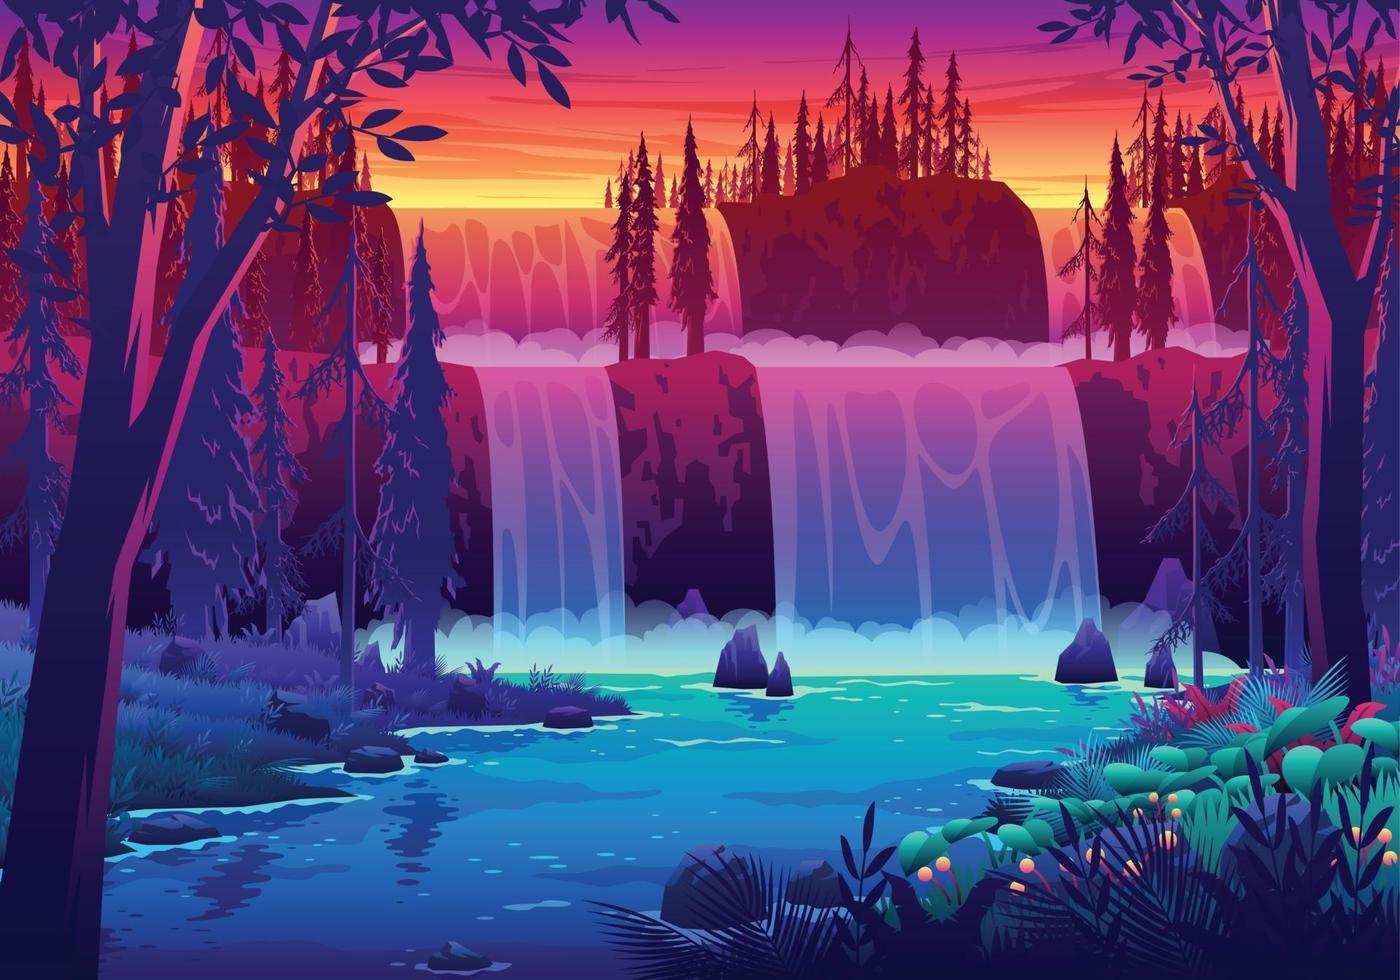 Sunset Waterfall Landscape Illustration vector